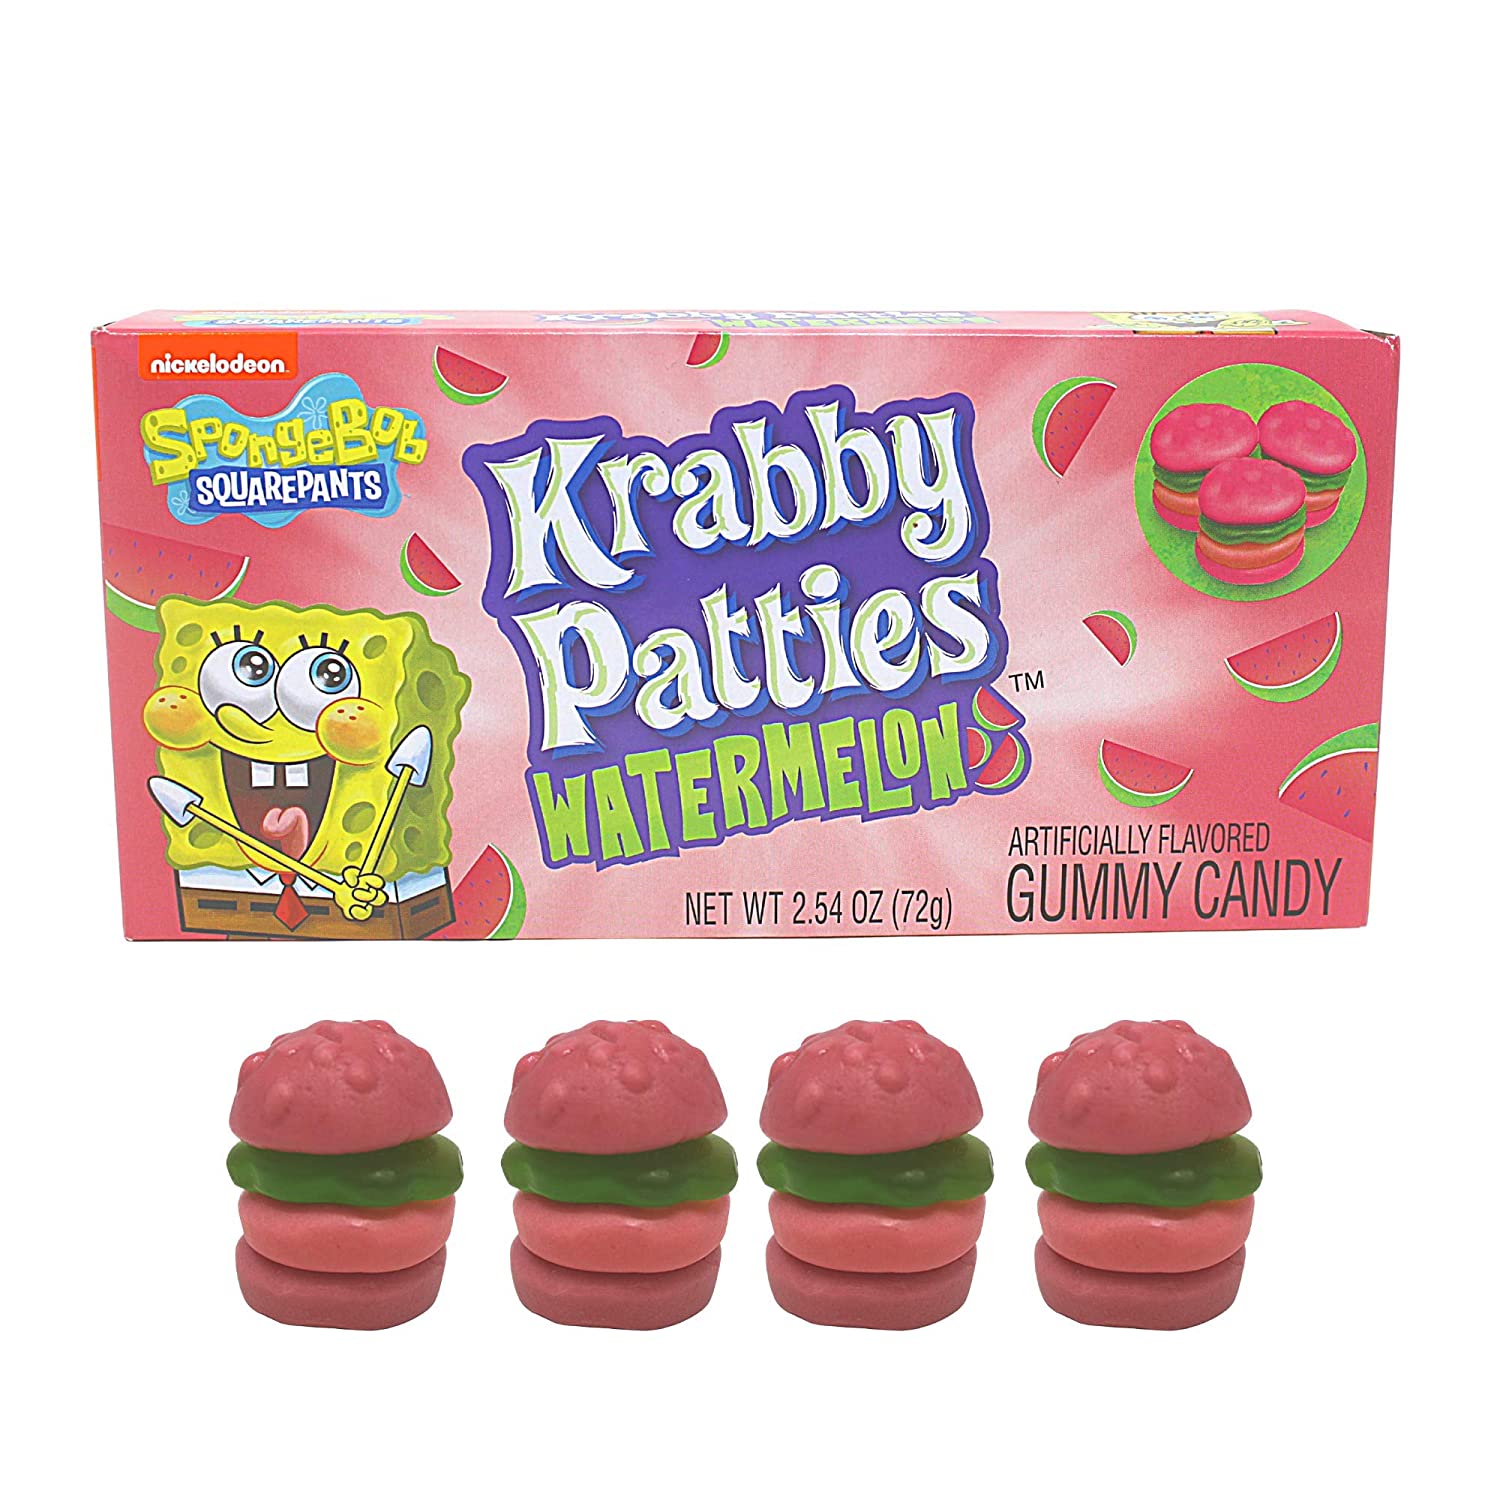 Spongebob Watermelon Krabby Patties Theaterbox Confection - Nibblers Popcorn Company